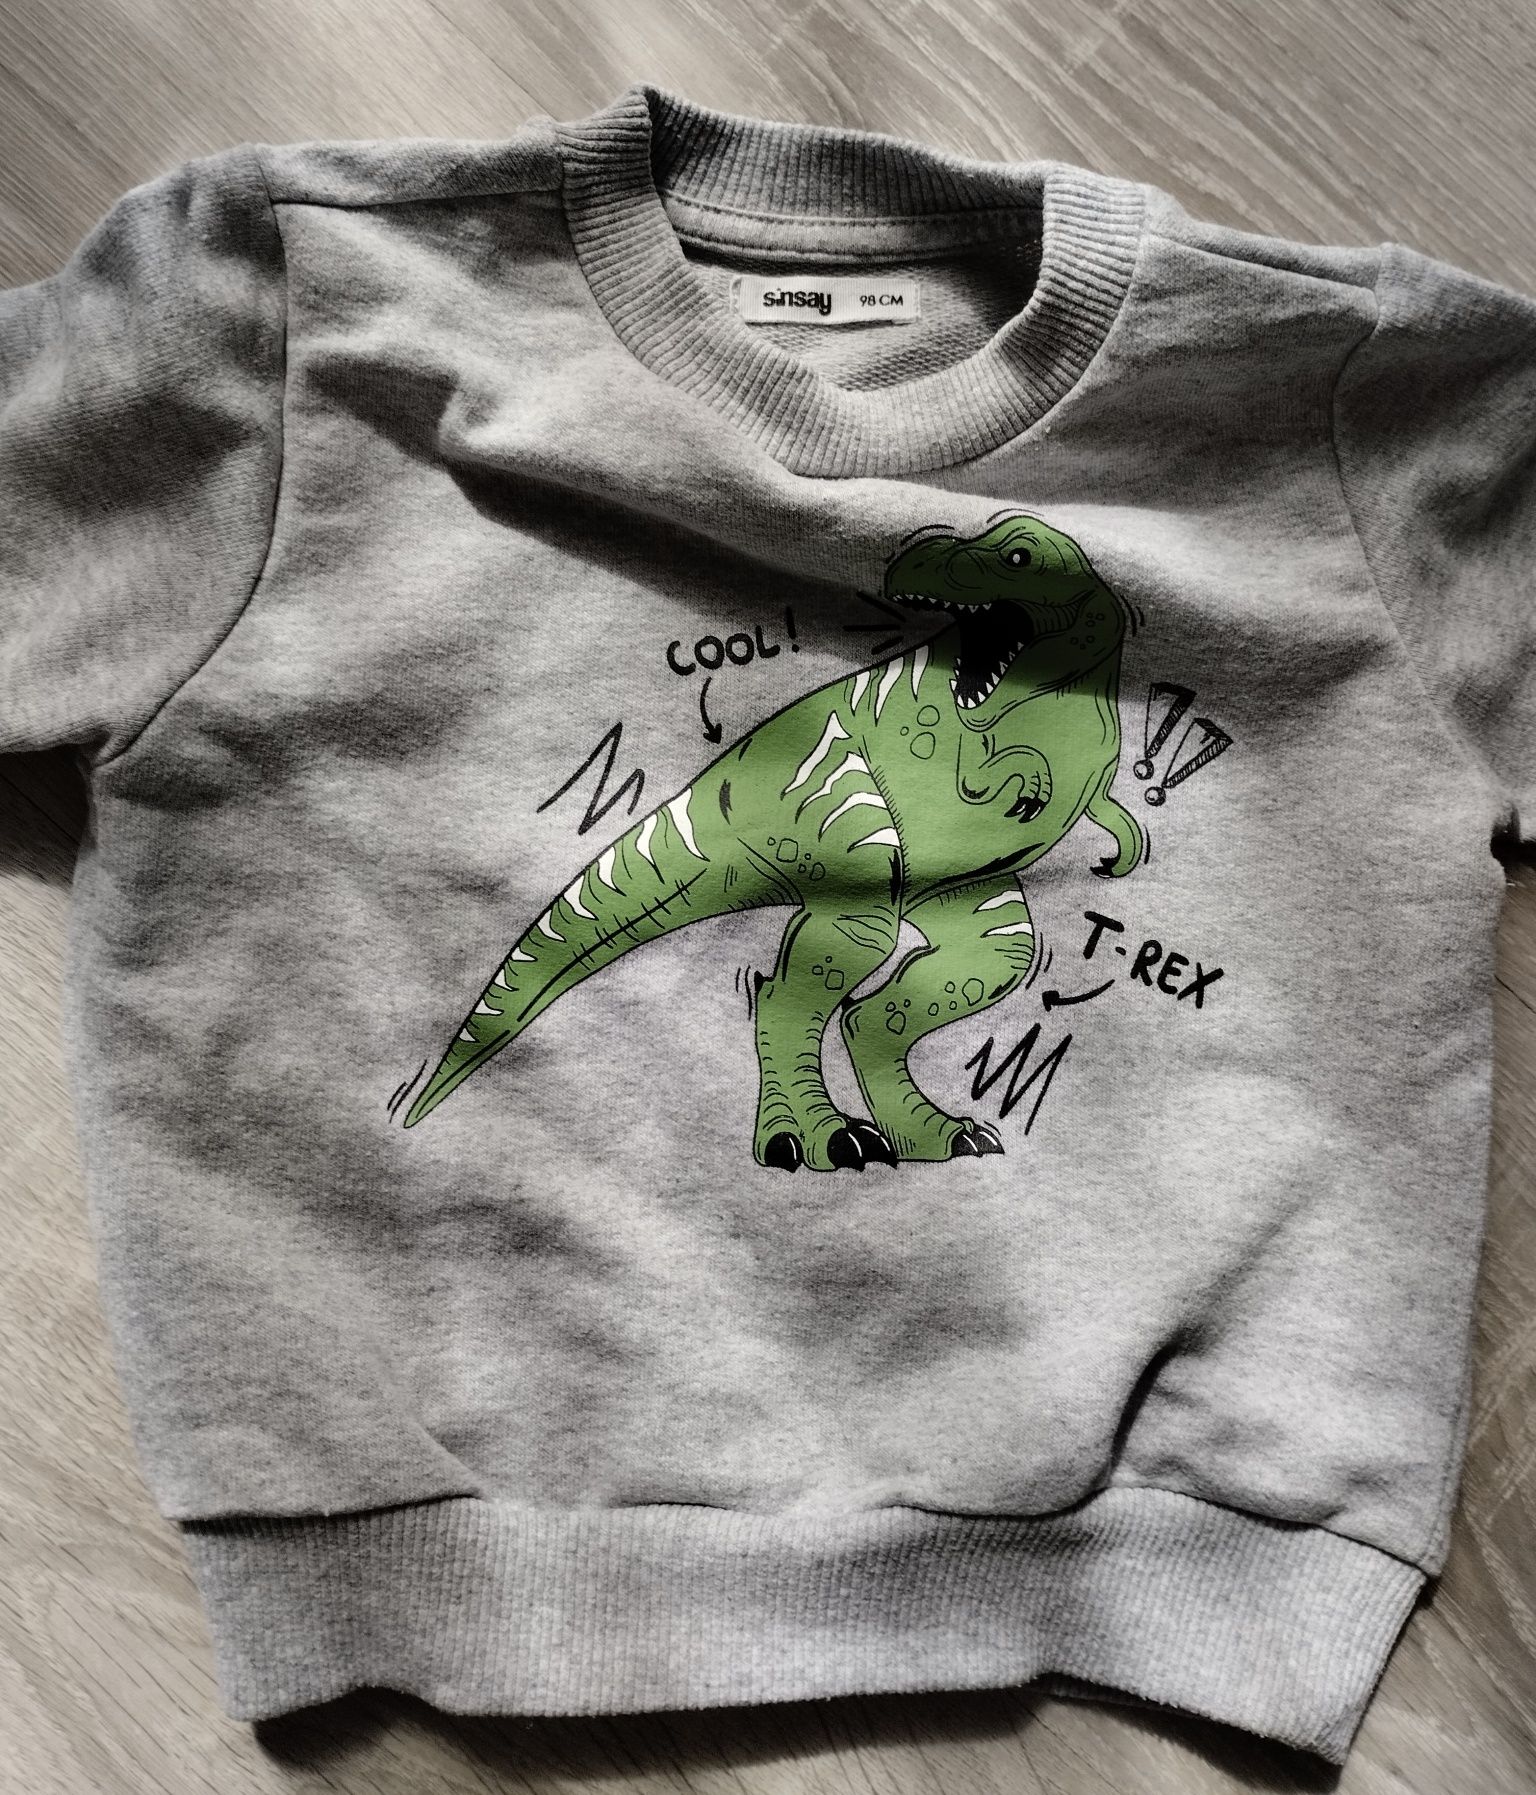 Szara bluza 98, bluza chłopięca T-rex, dinosaur Sinsay.
Bluza bez wad.